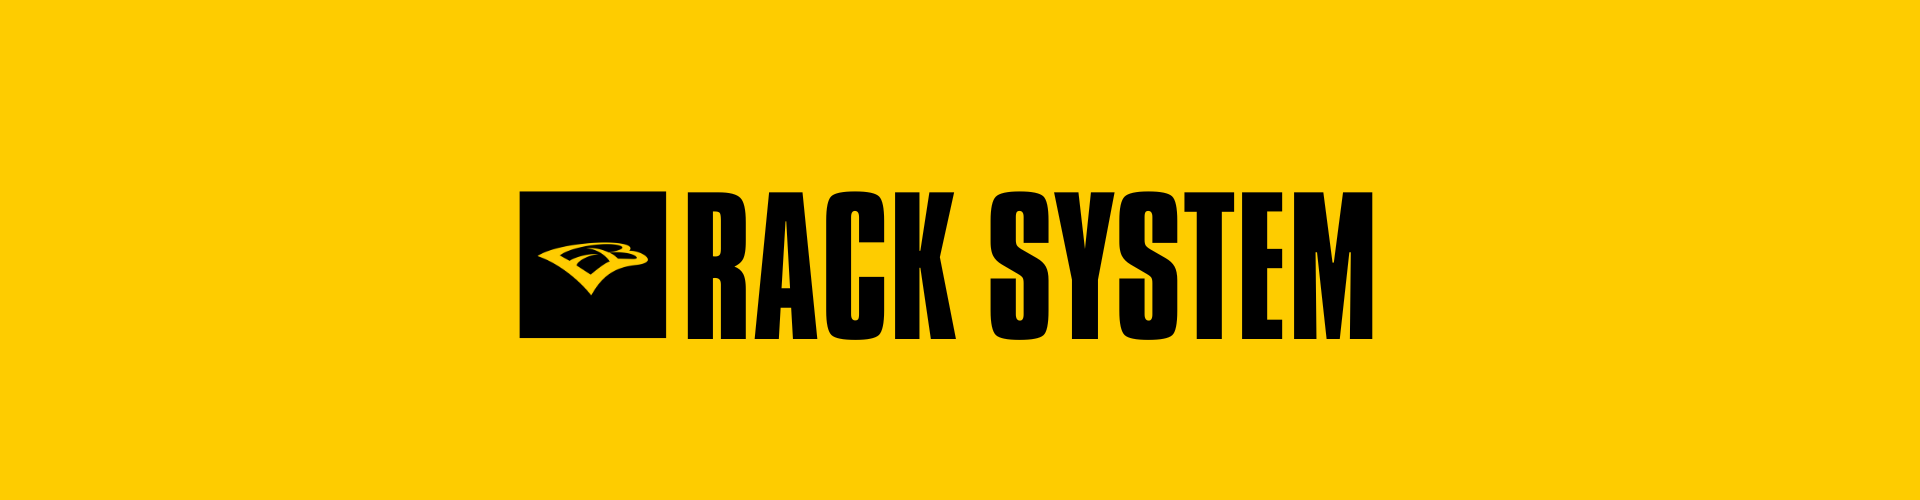 RACK SYSTEM